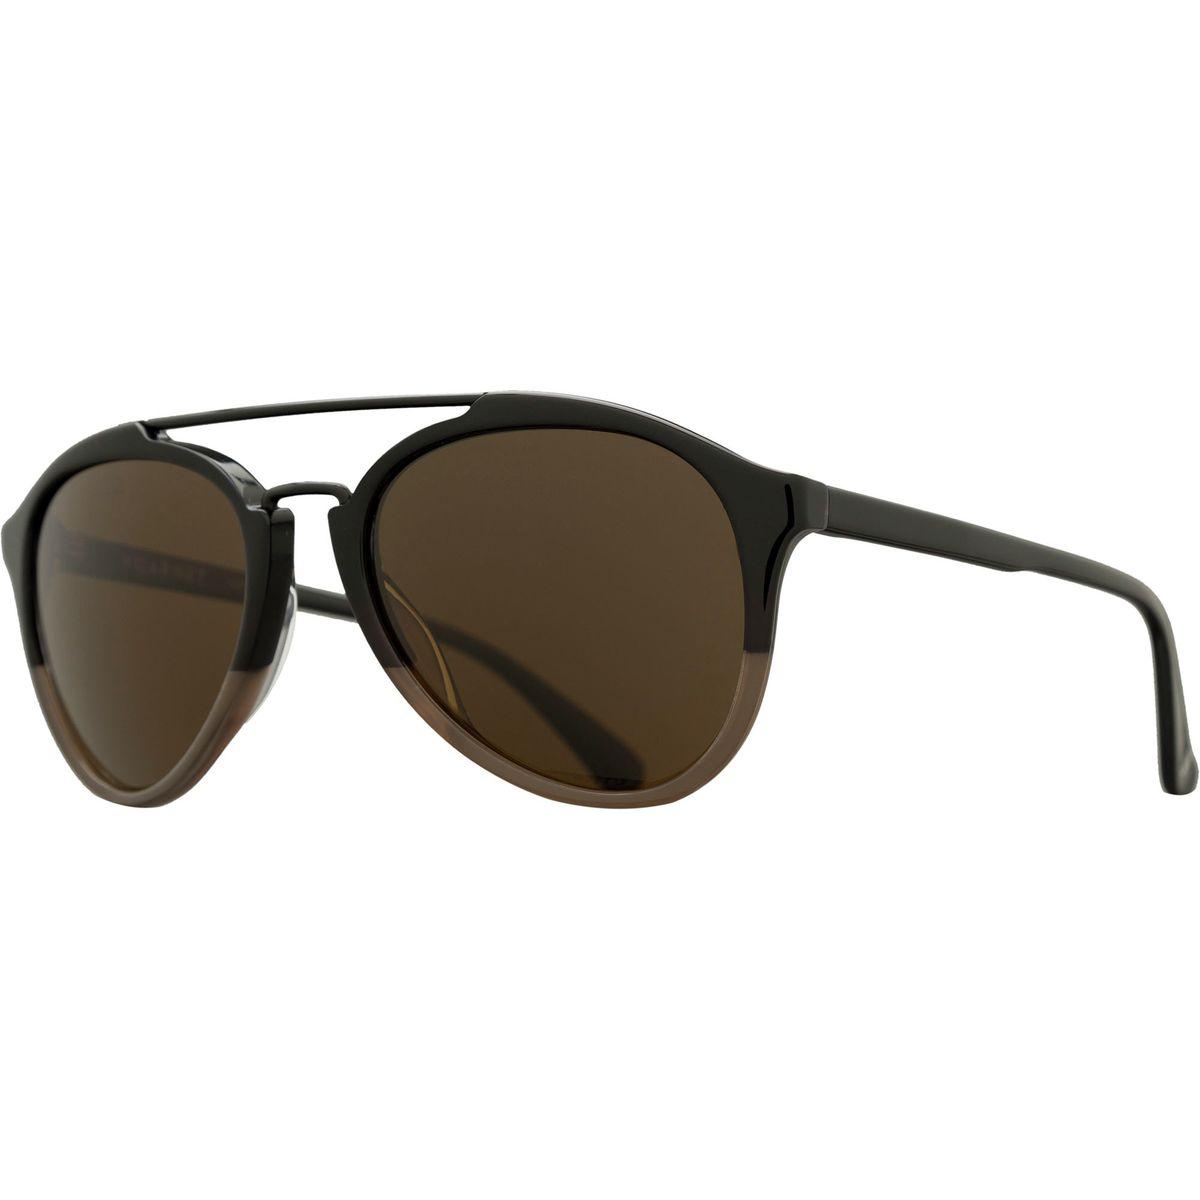 Vuarnet Pilot Cable Car Sunglasses in Brown for Men - Lyst